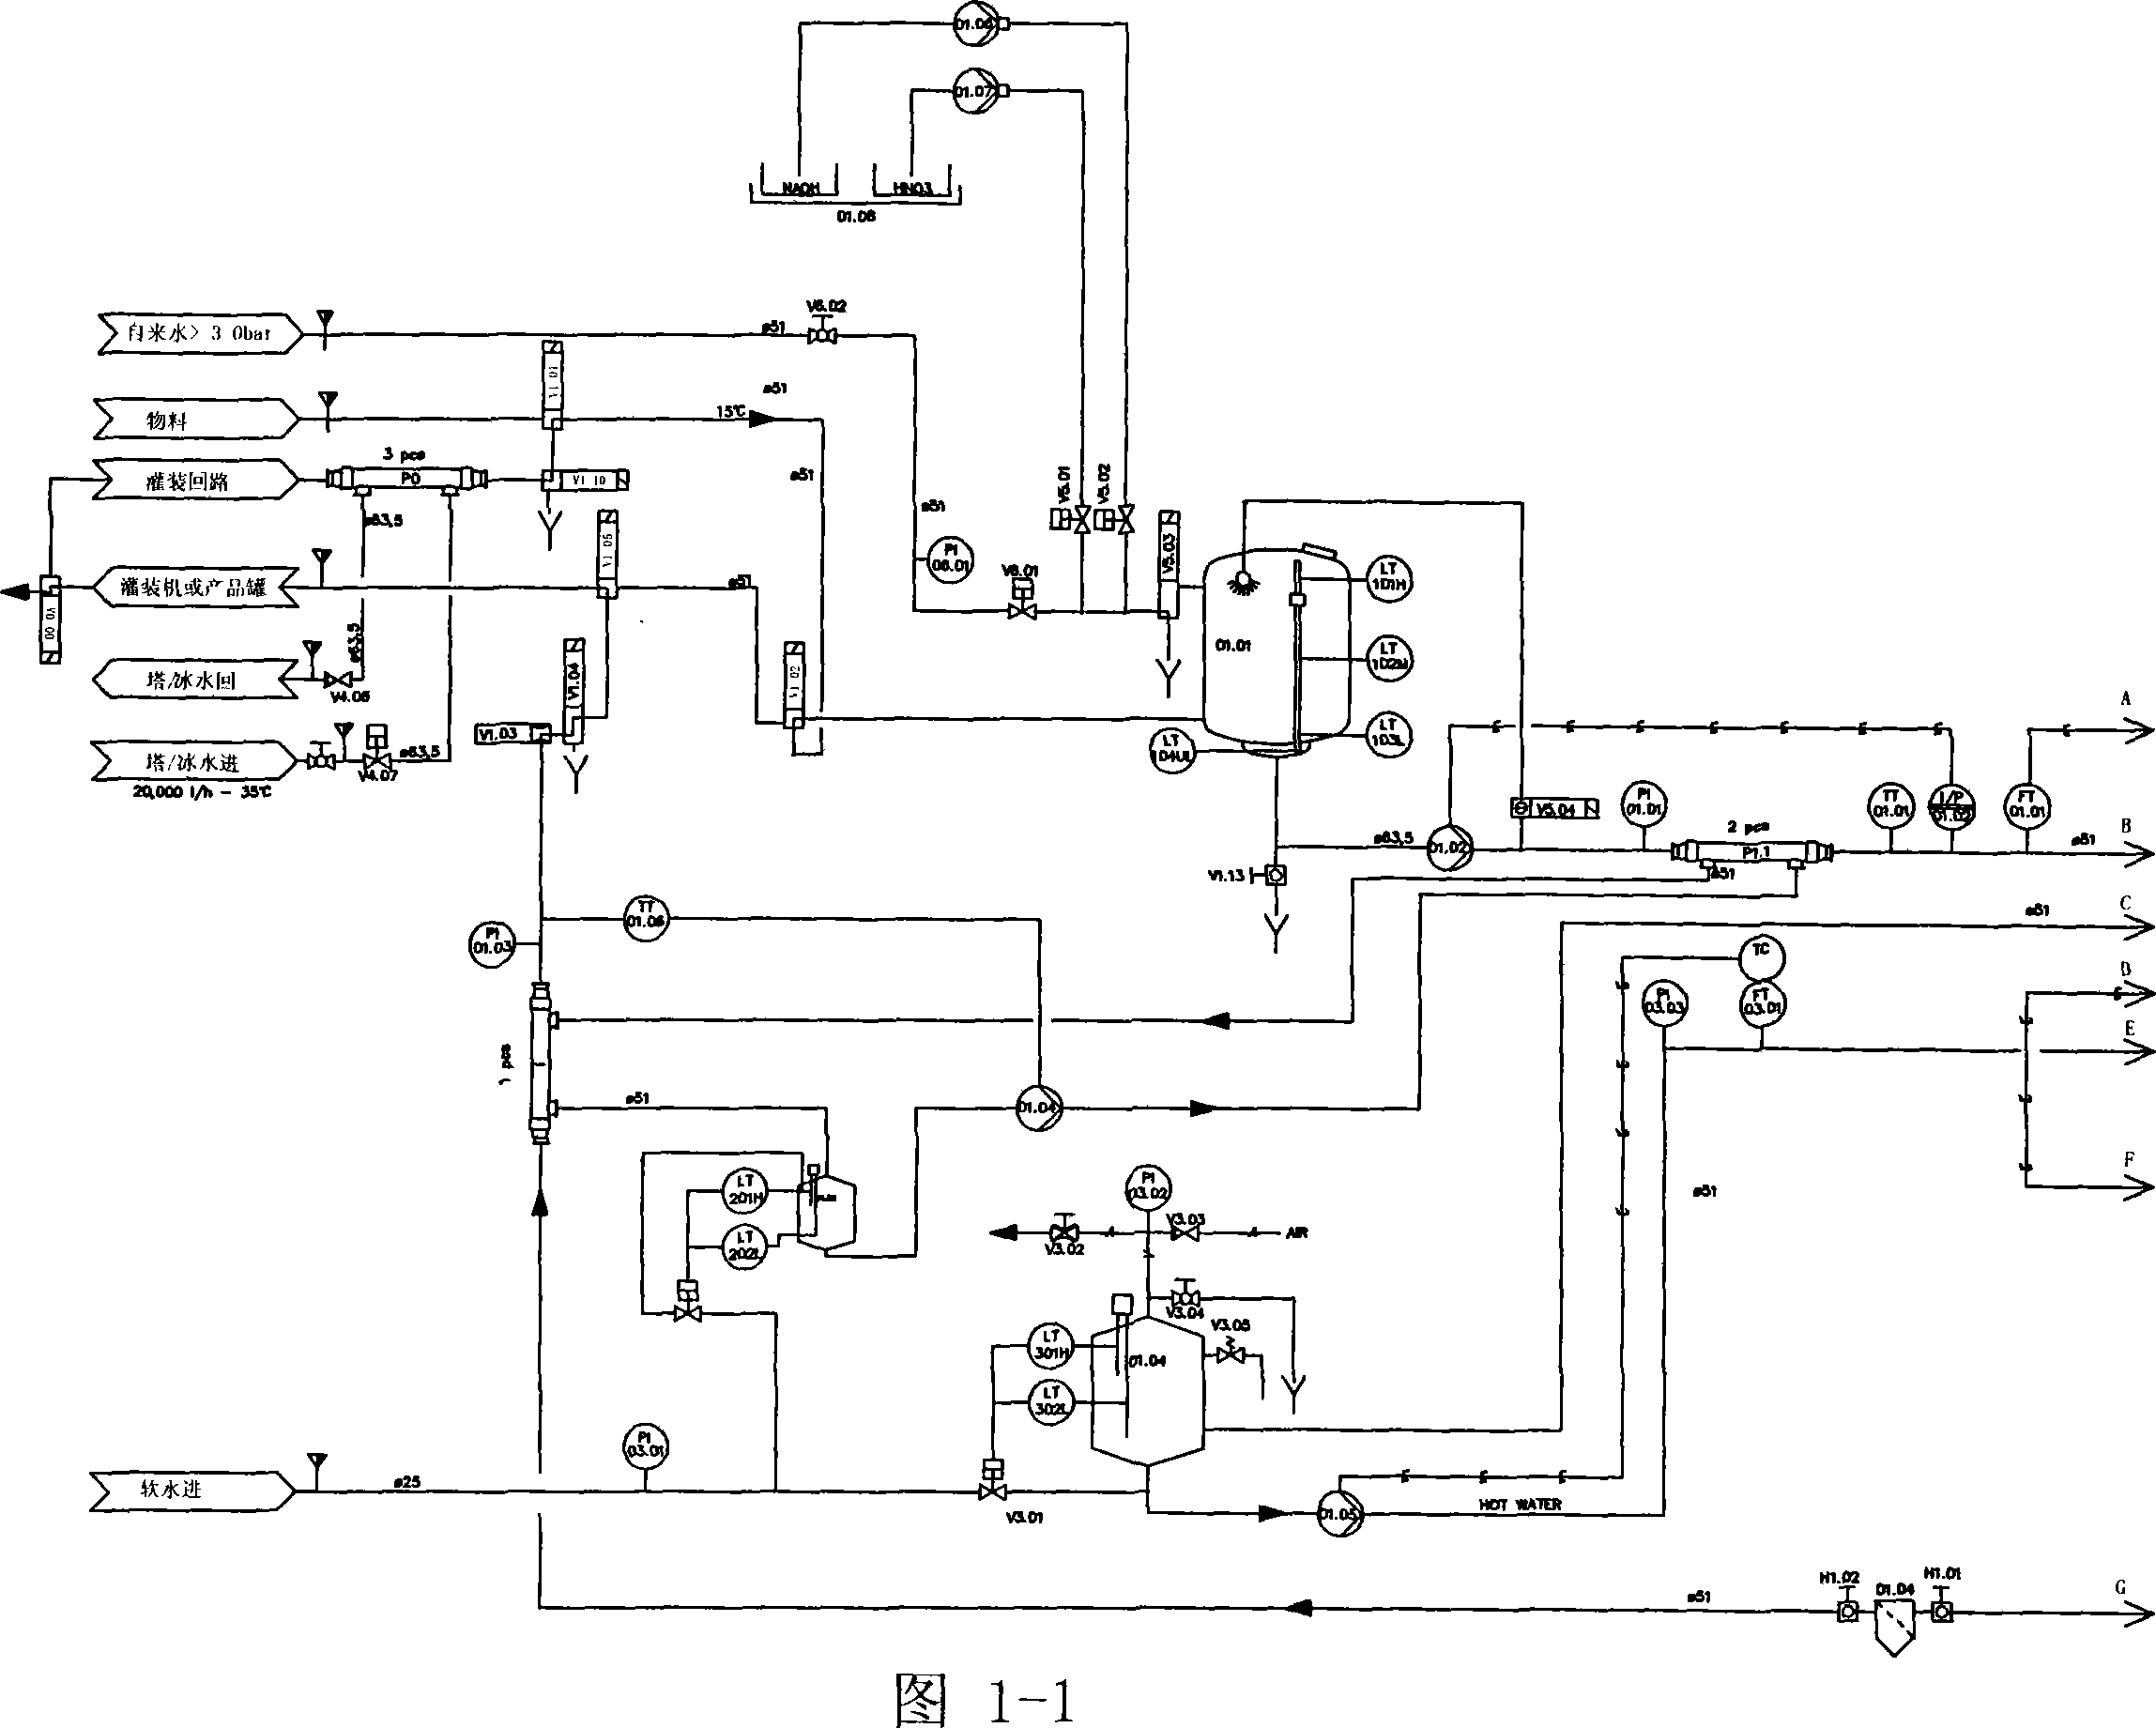 Process flow of the full-automatic ultra-high temperature sterilization machine